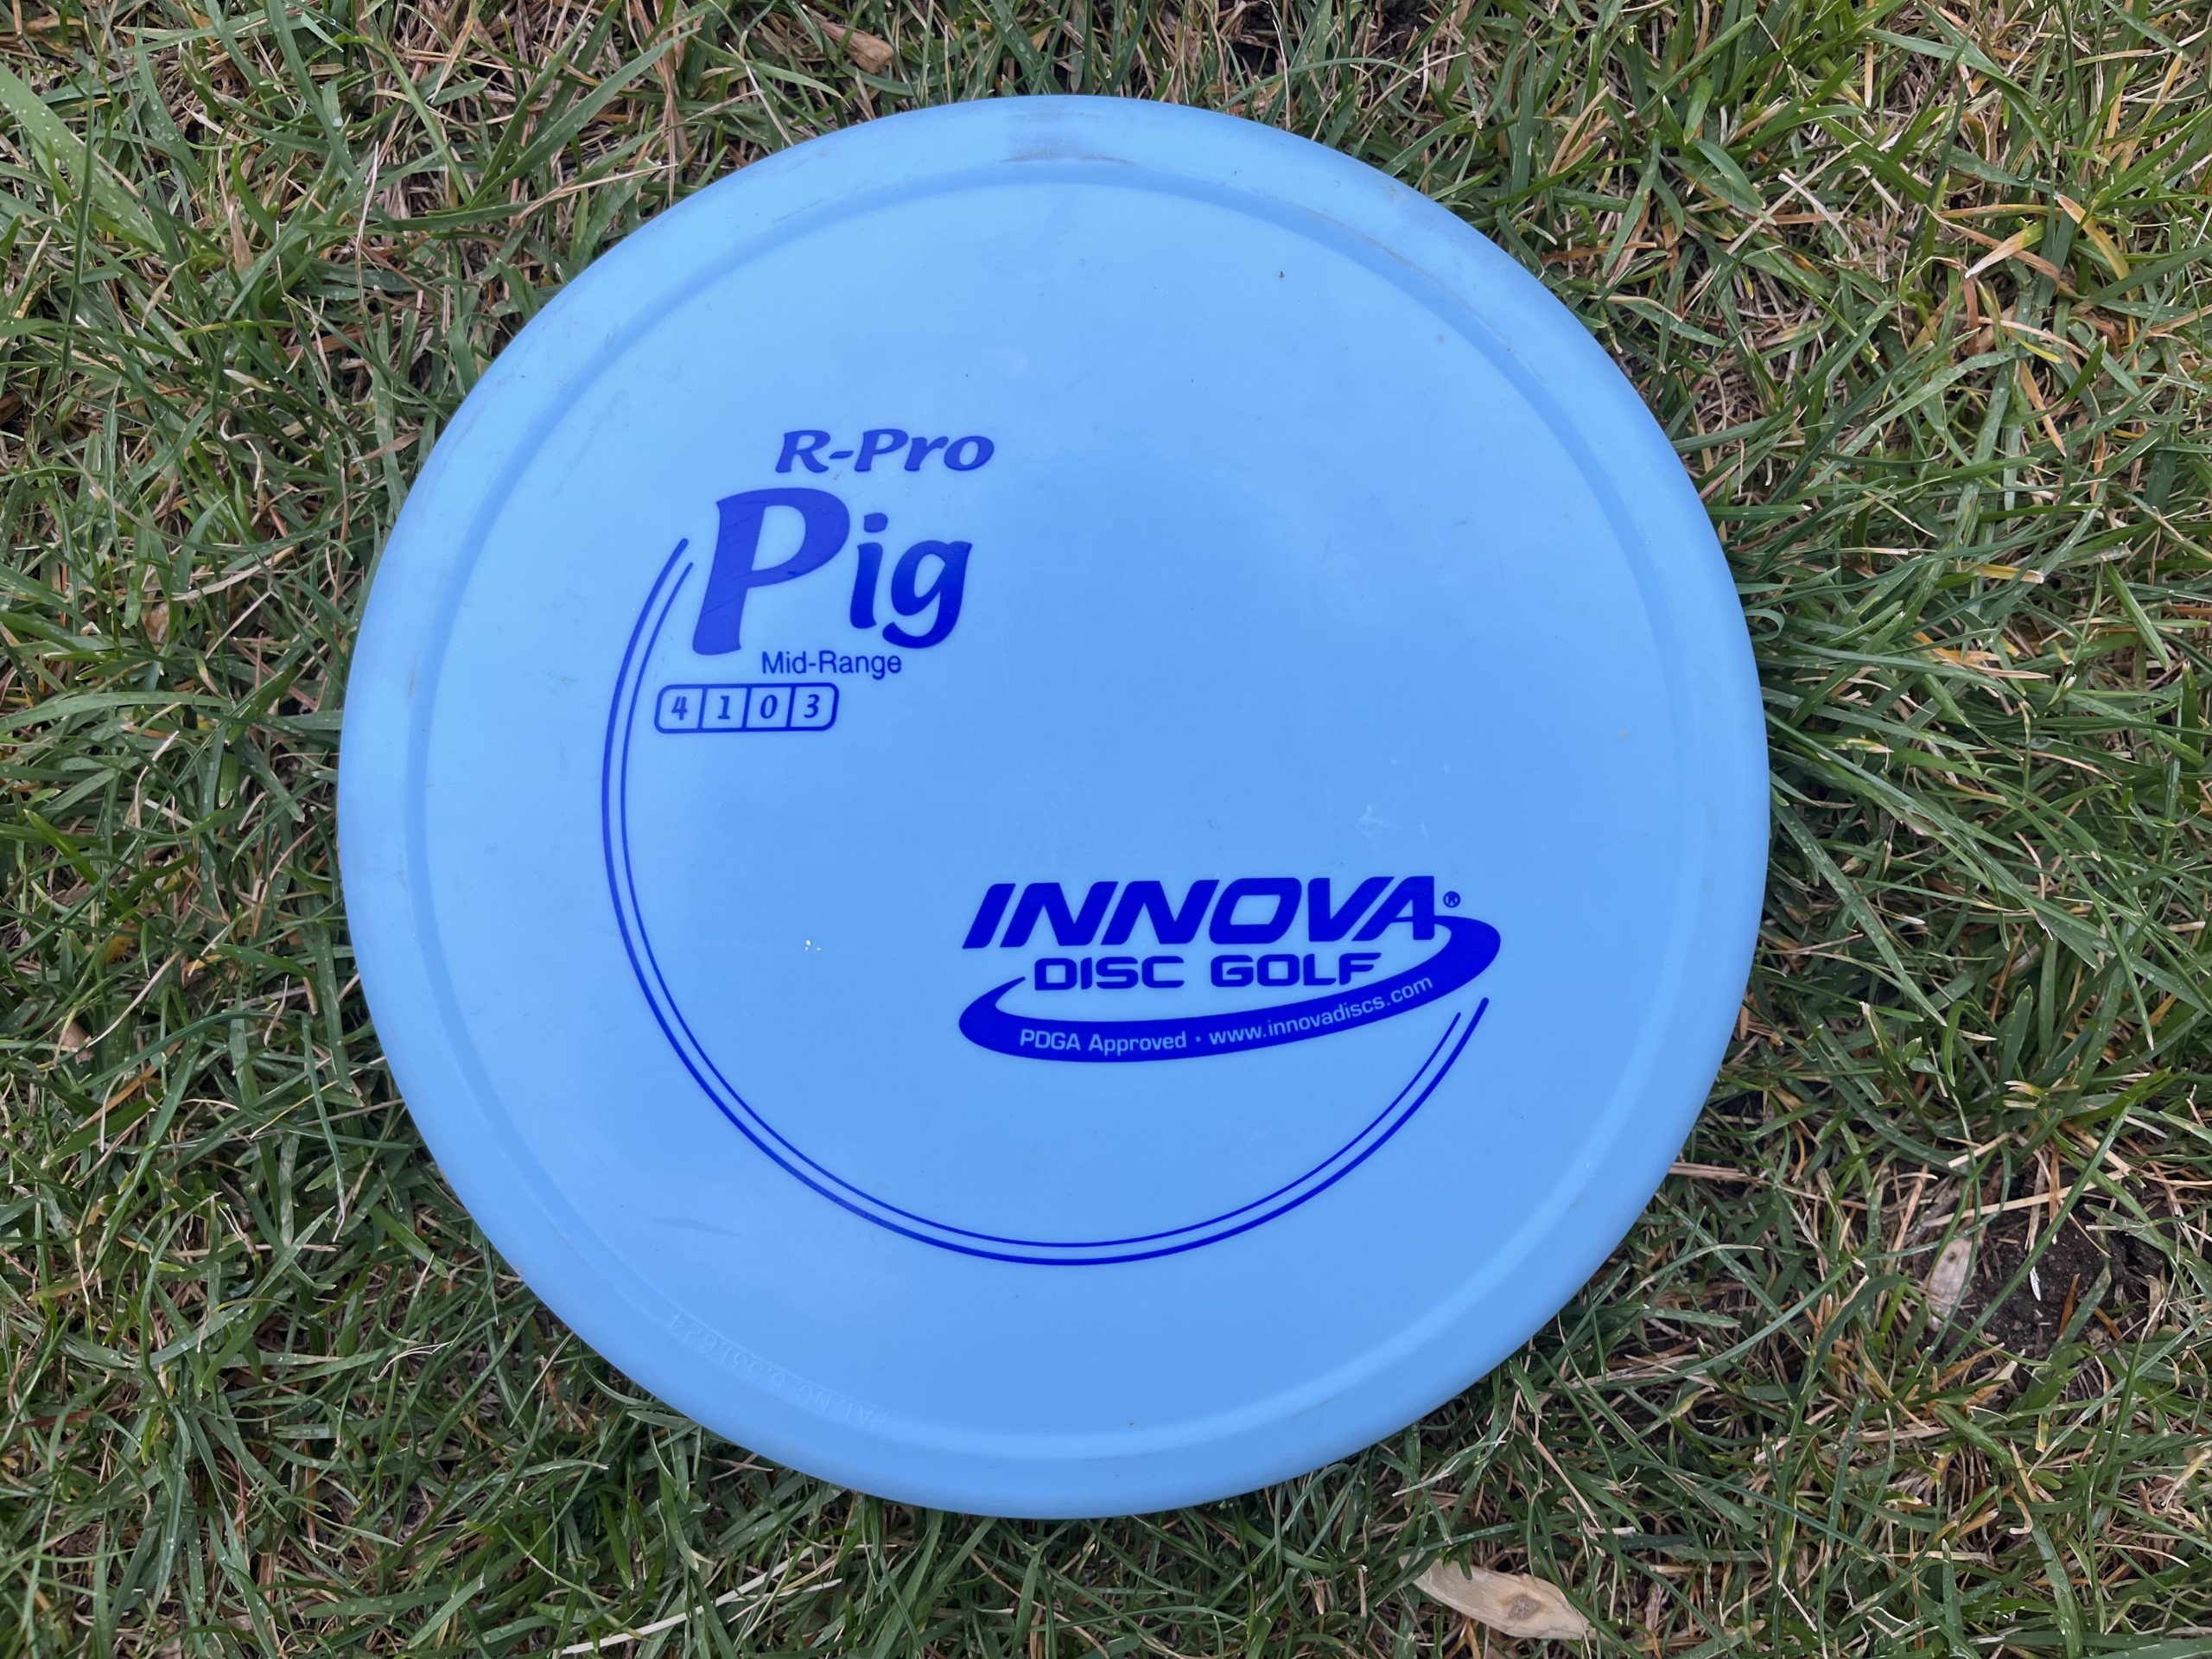 The Innova R-Pro Pig is an overstable midrange.